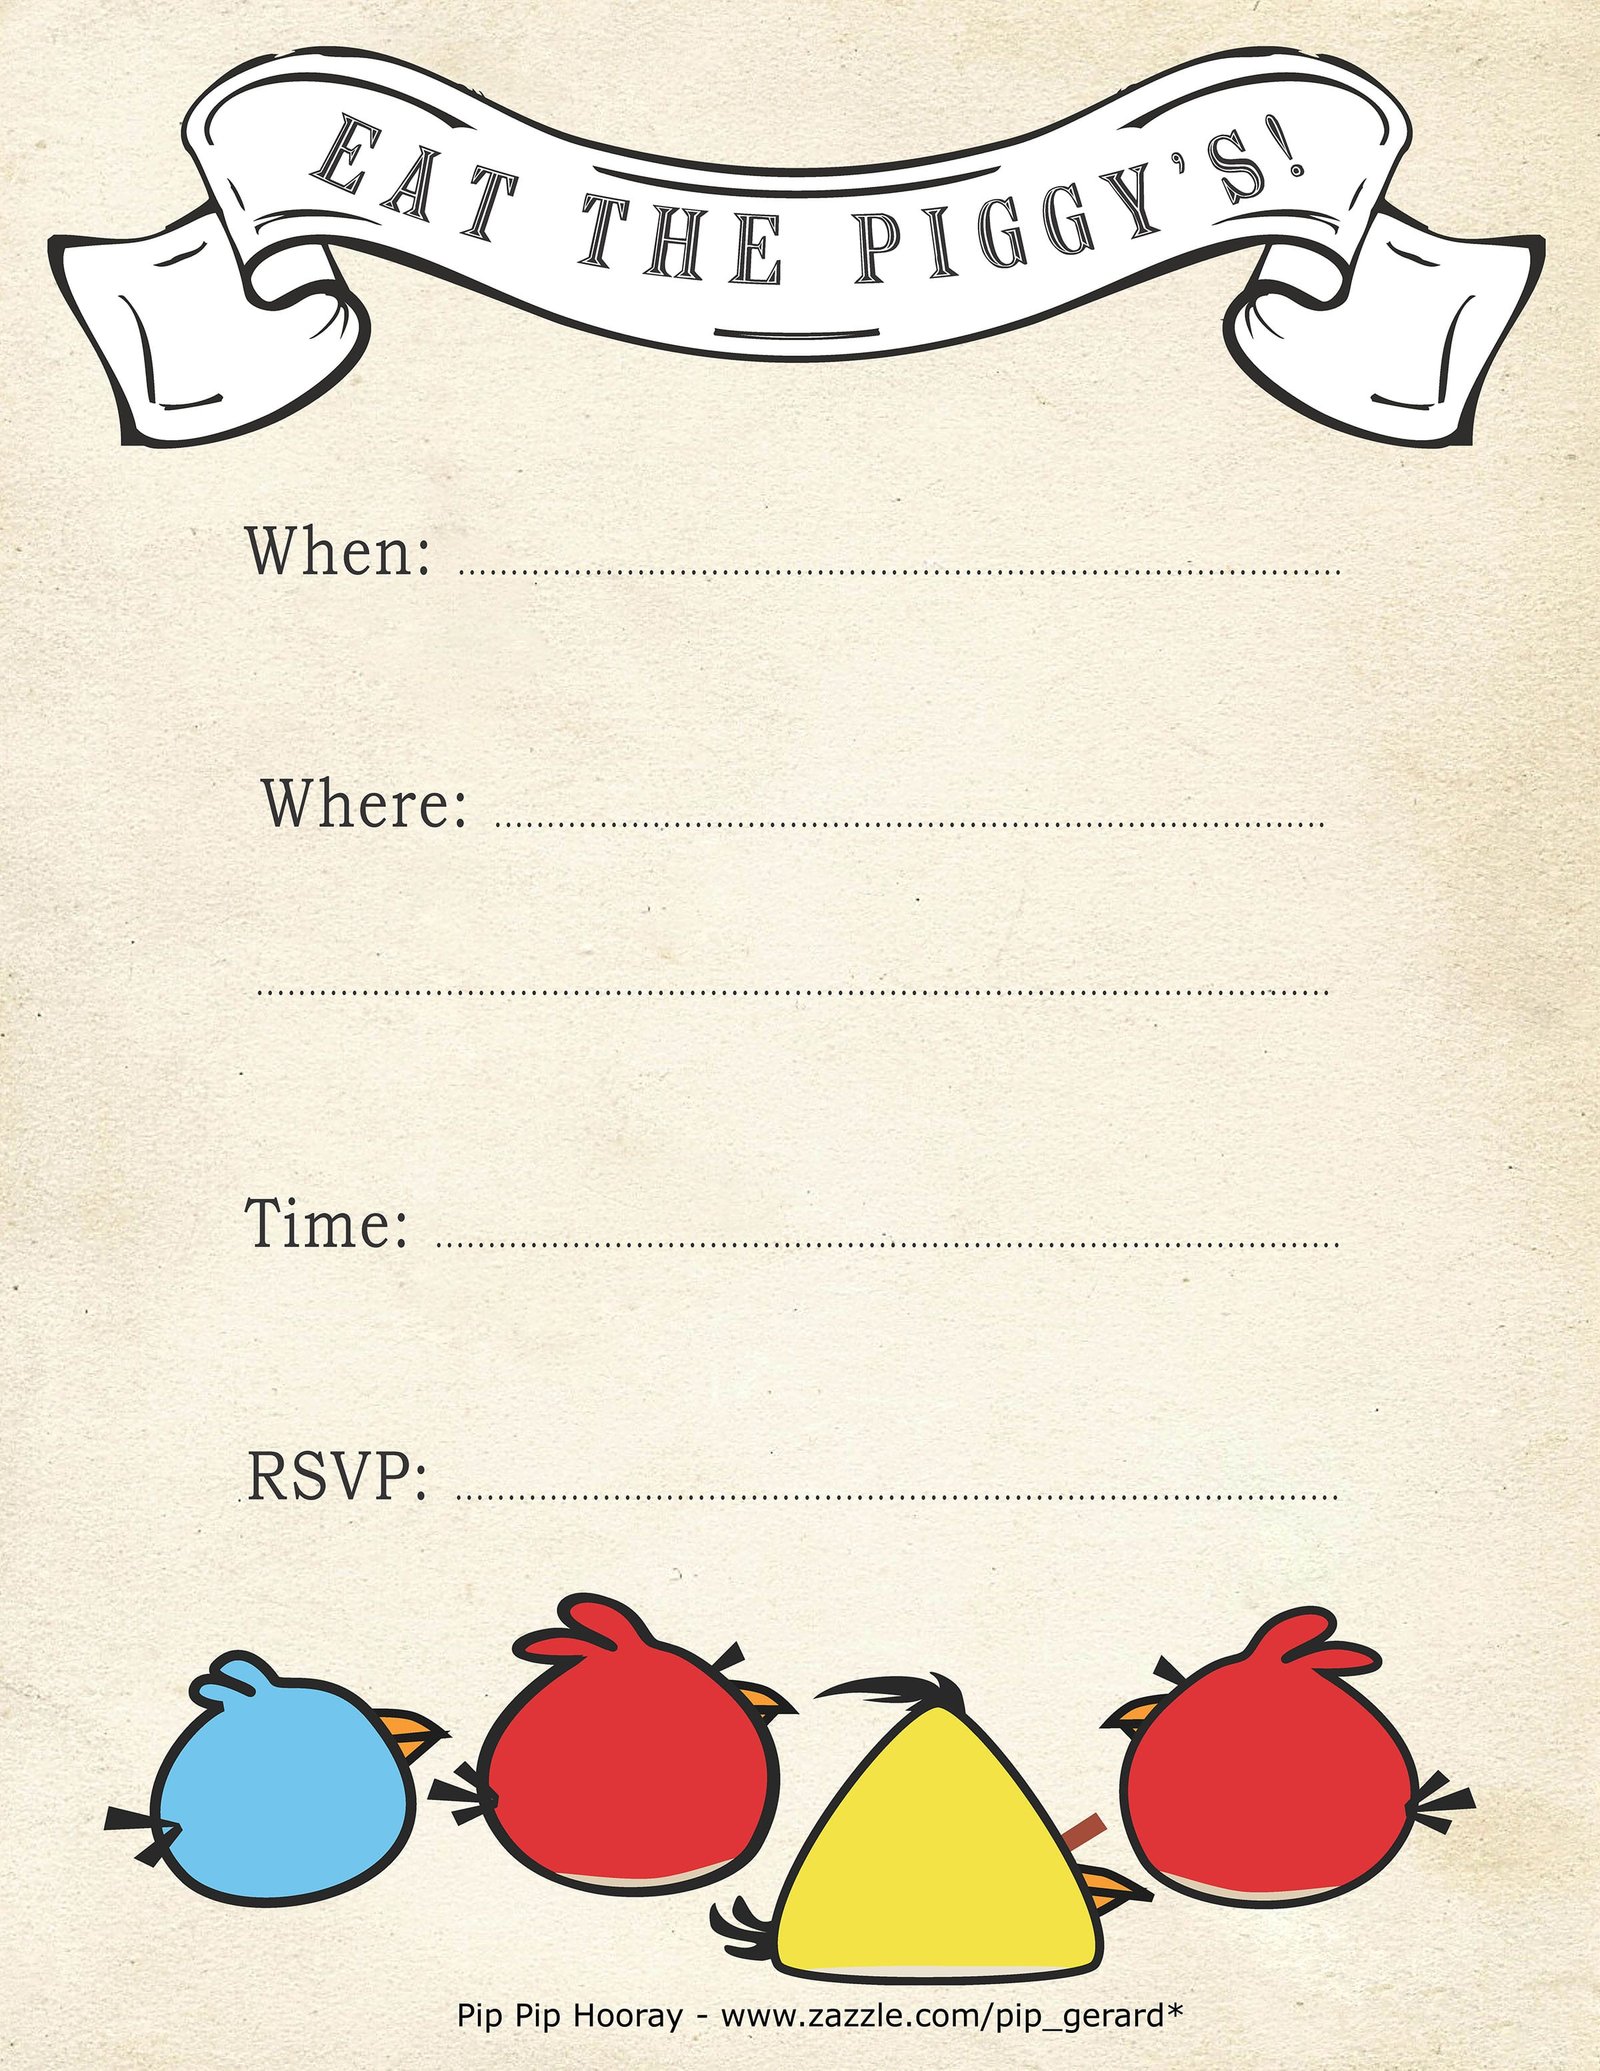 angry-birds-invitation-free-printable